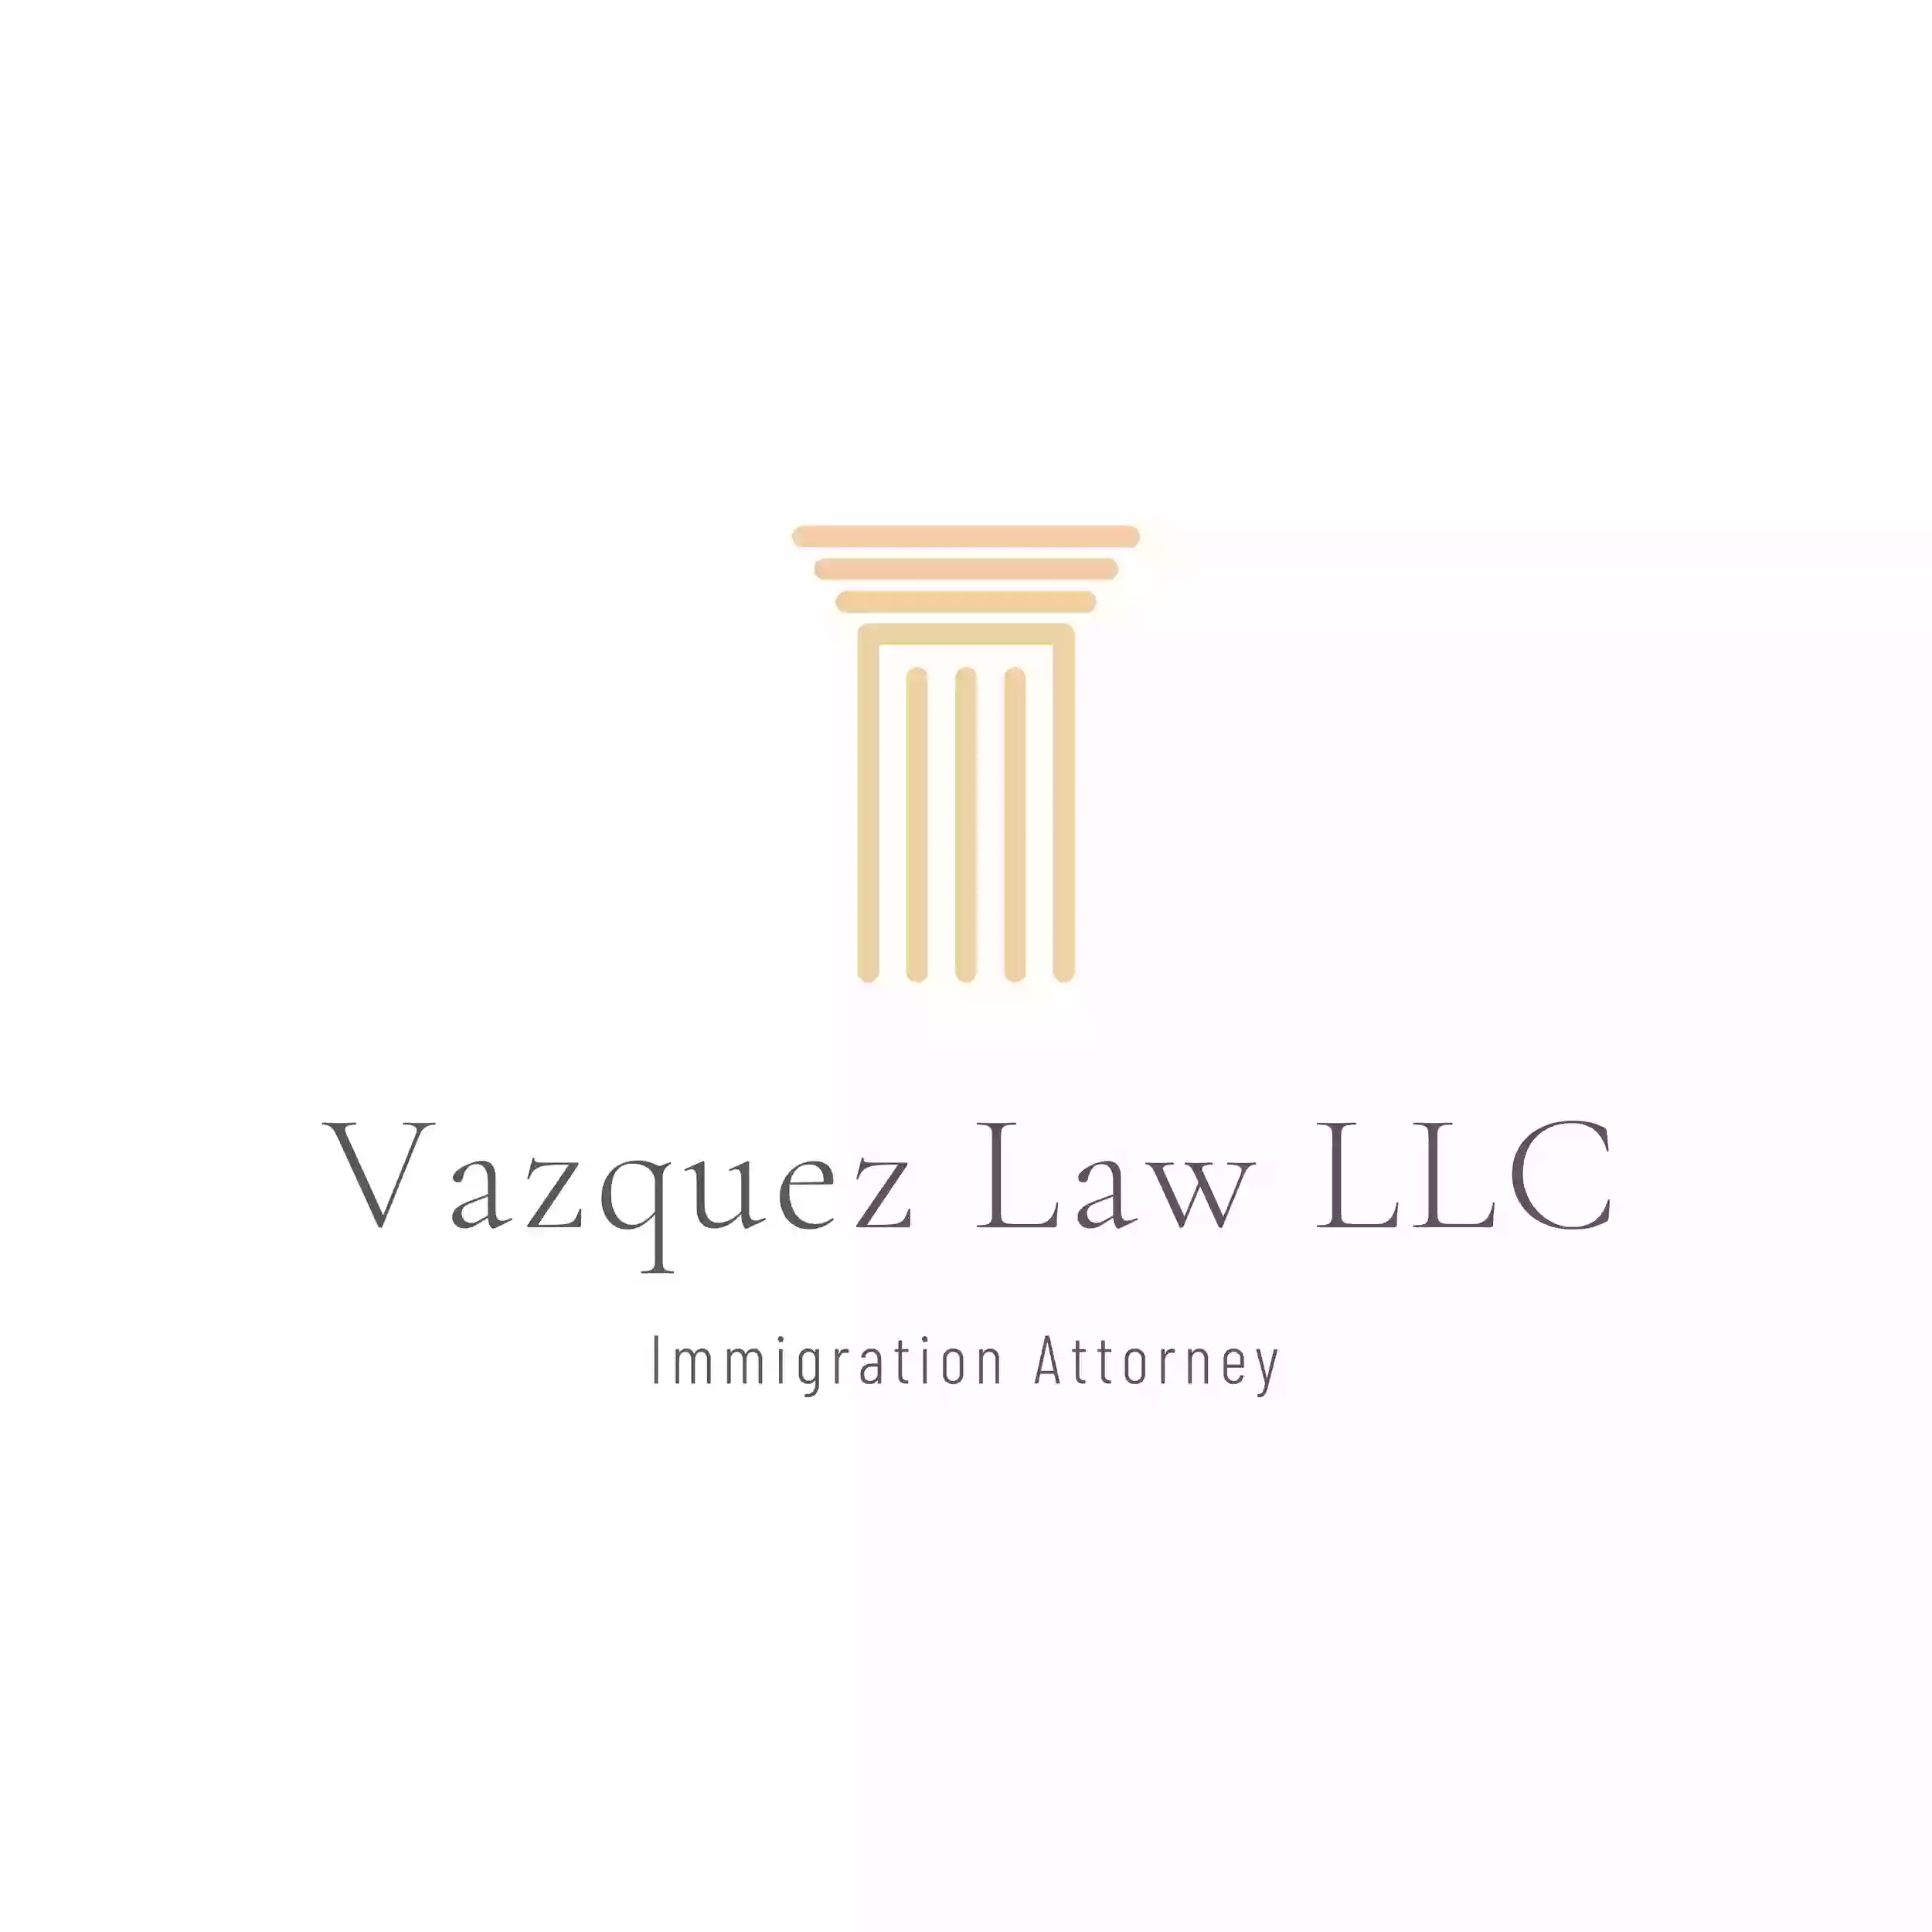 Vazquez Law LLC